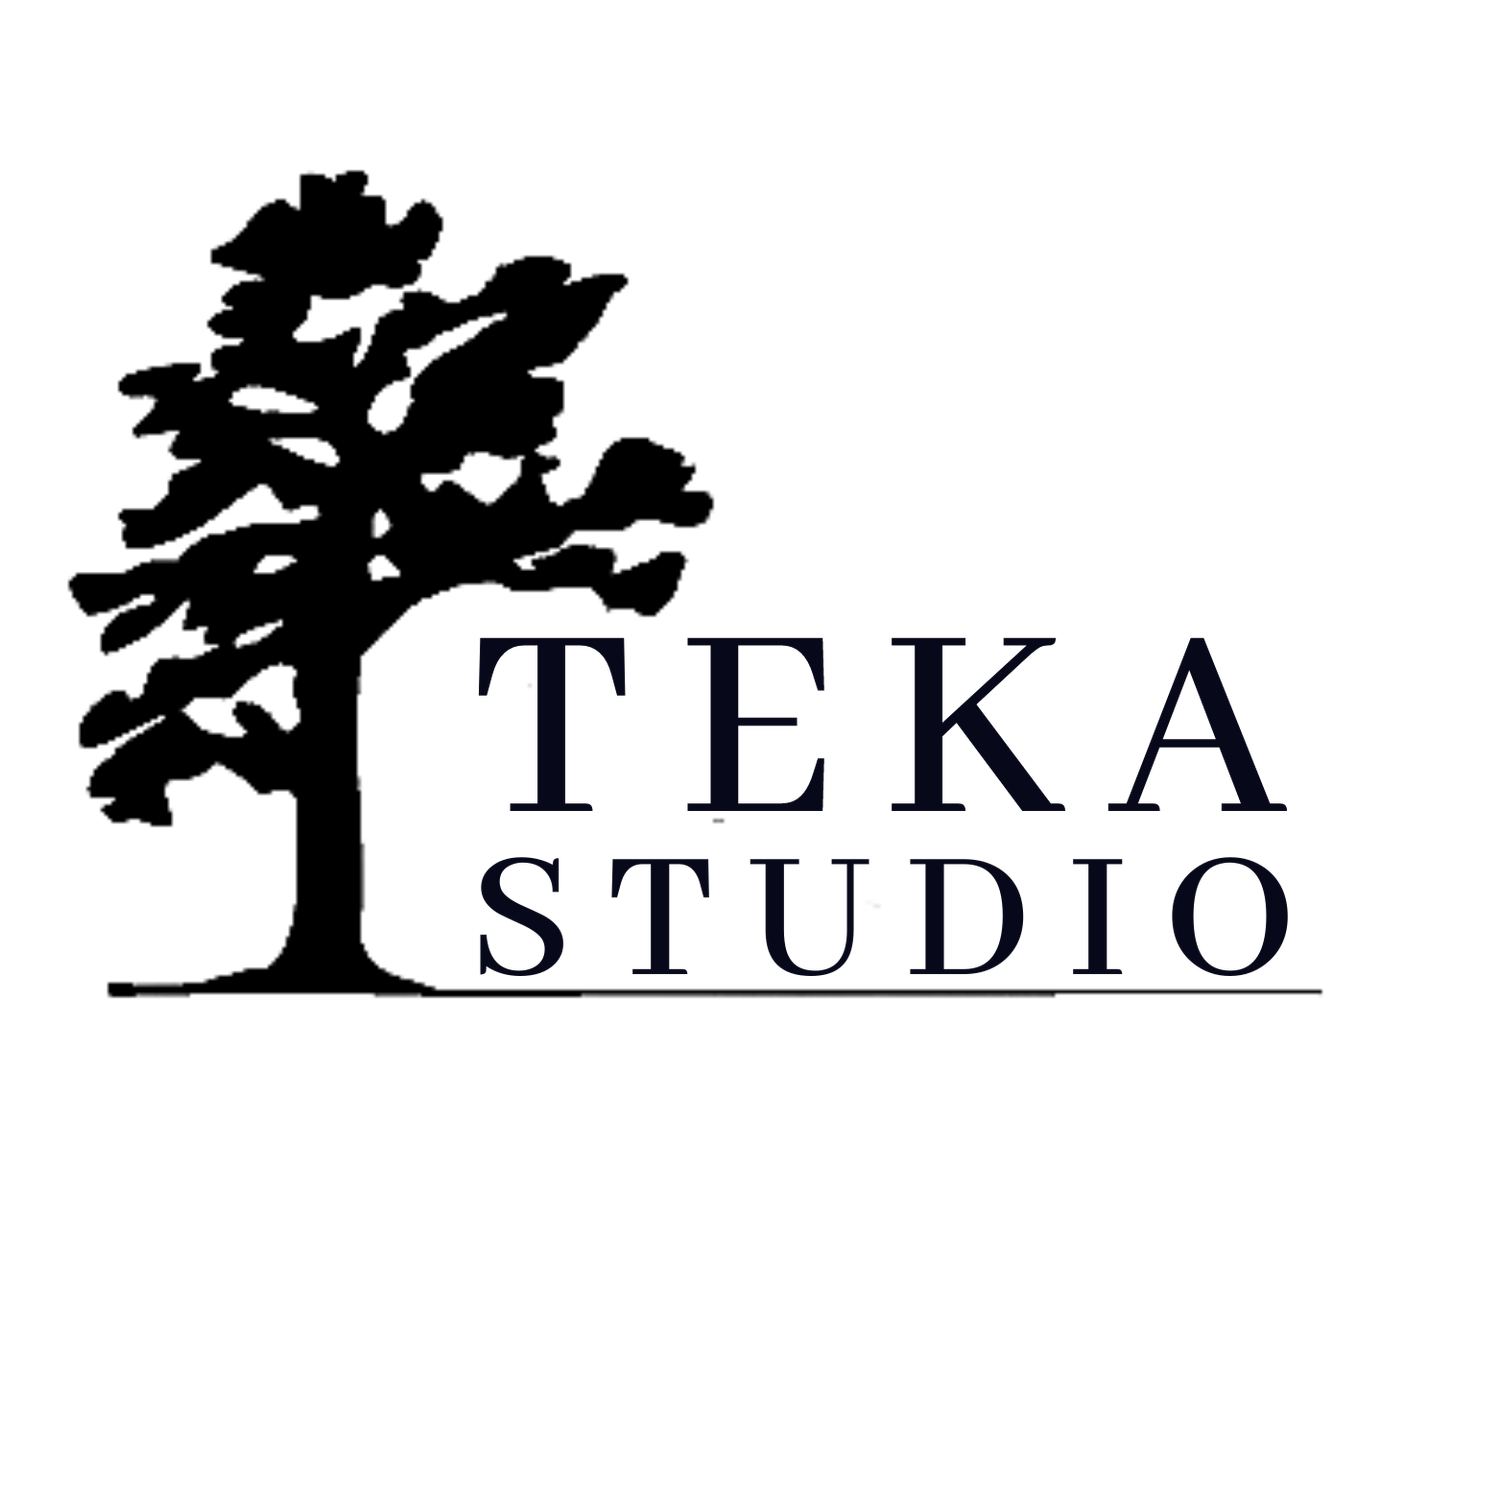 Teka Studio